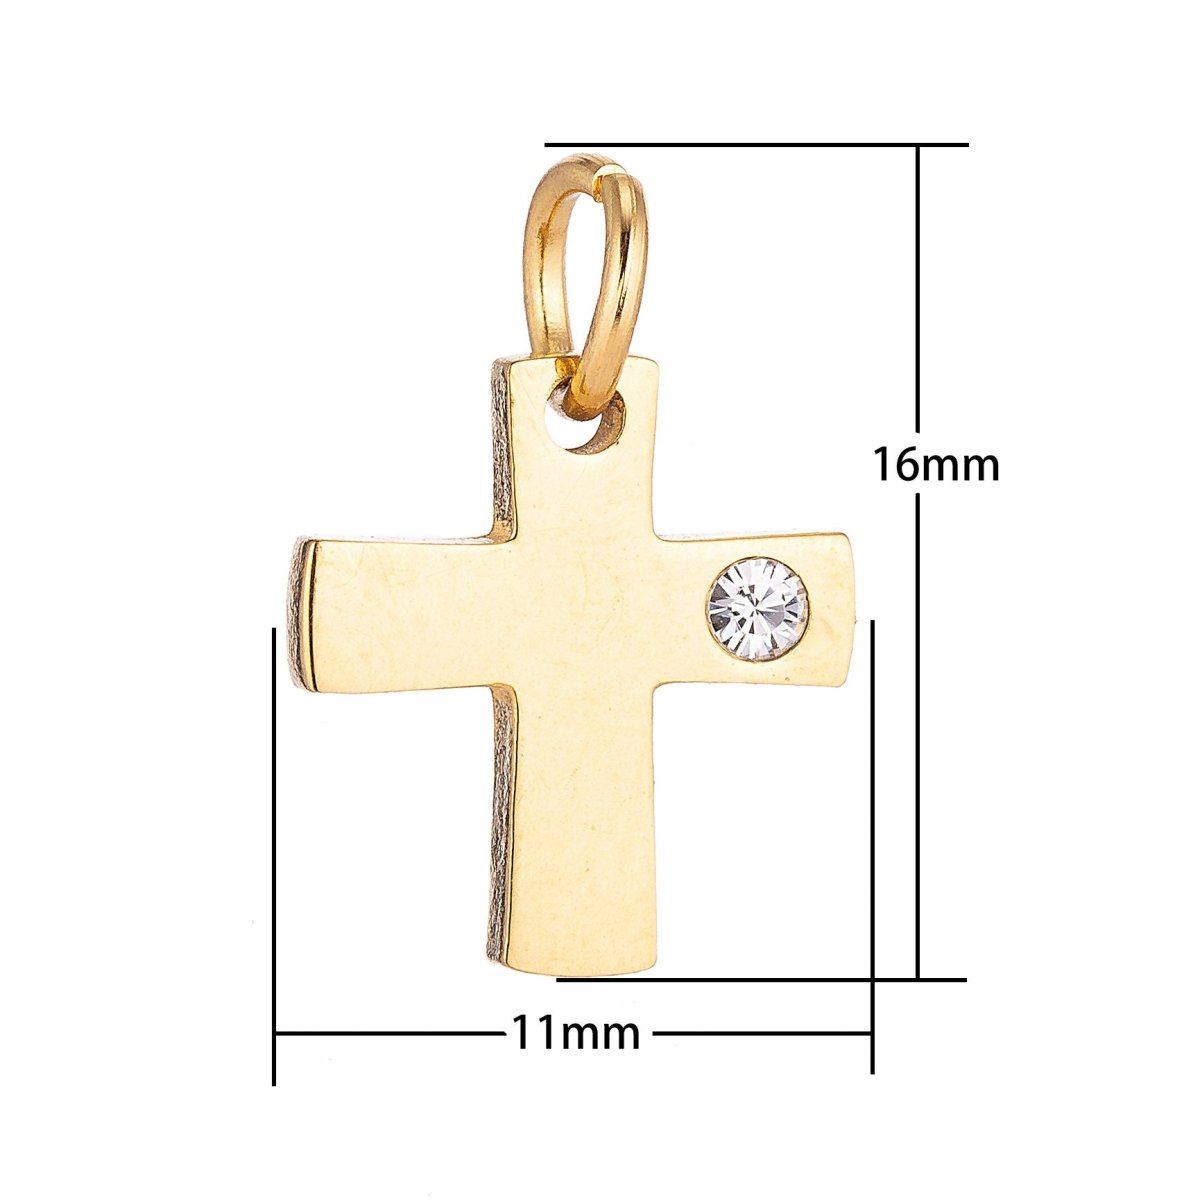 18k Gold Fill Stainless Steel Minimalist Dainty Cross Cubic Zirconia Bracelet Charm Necklace Pendant Findings for Jewelry Making E-630 - DLUXCA